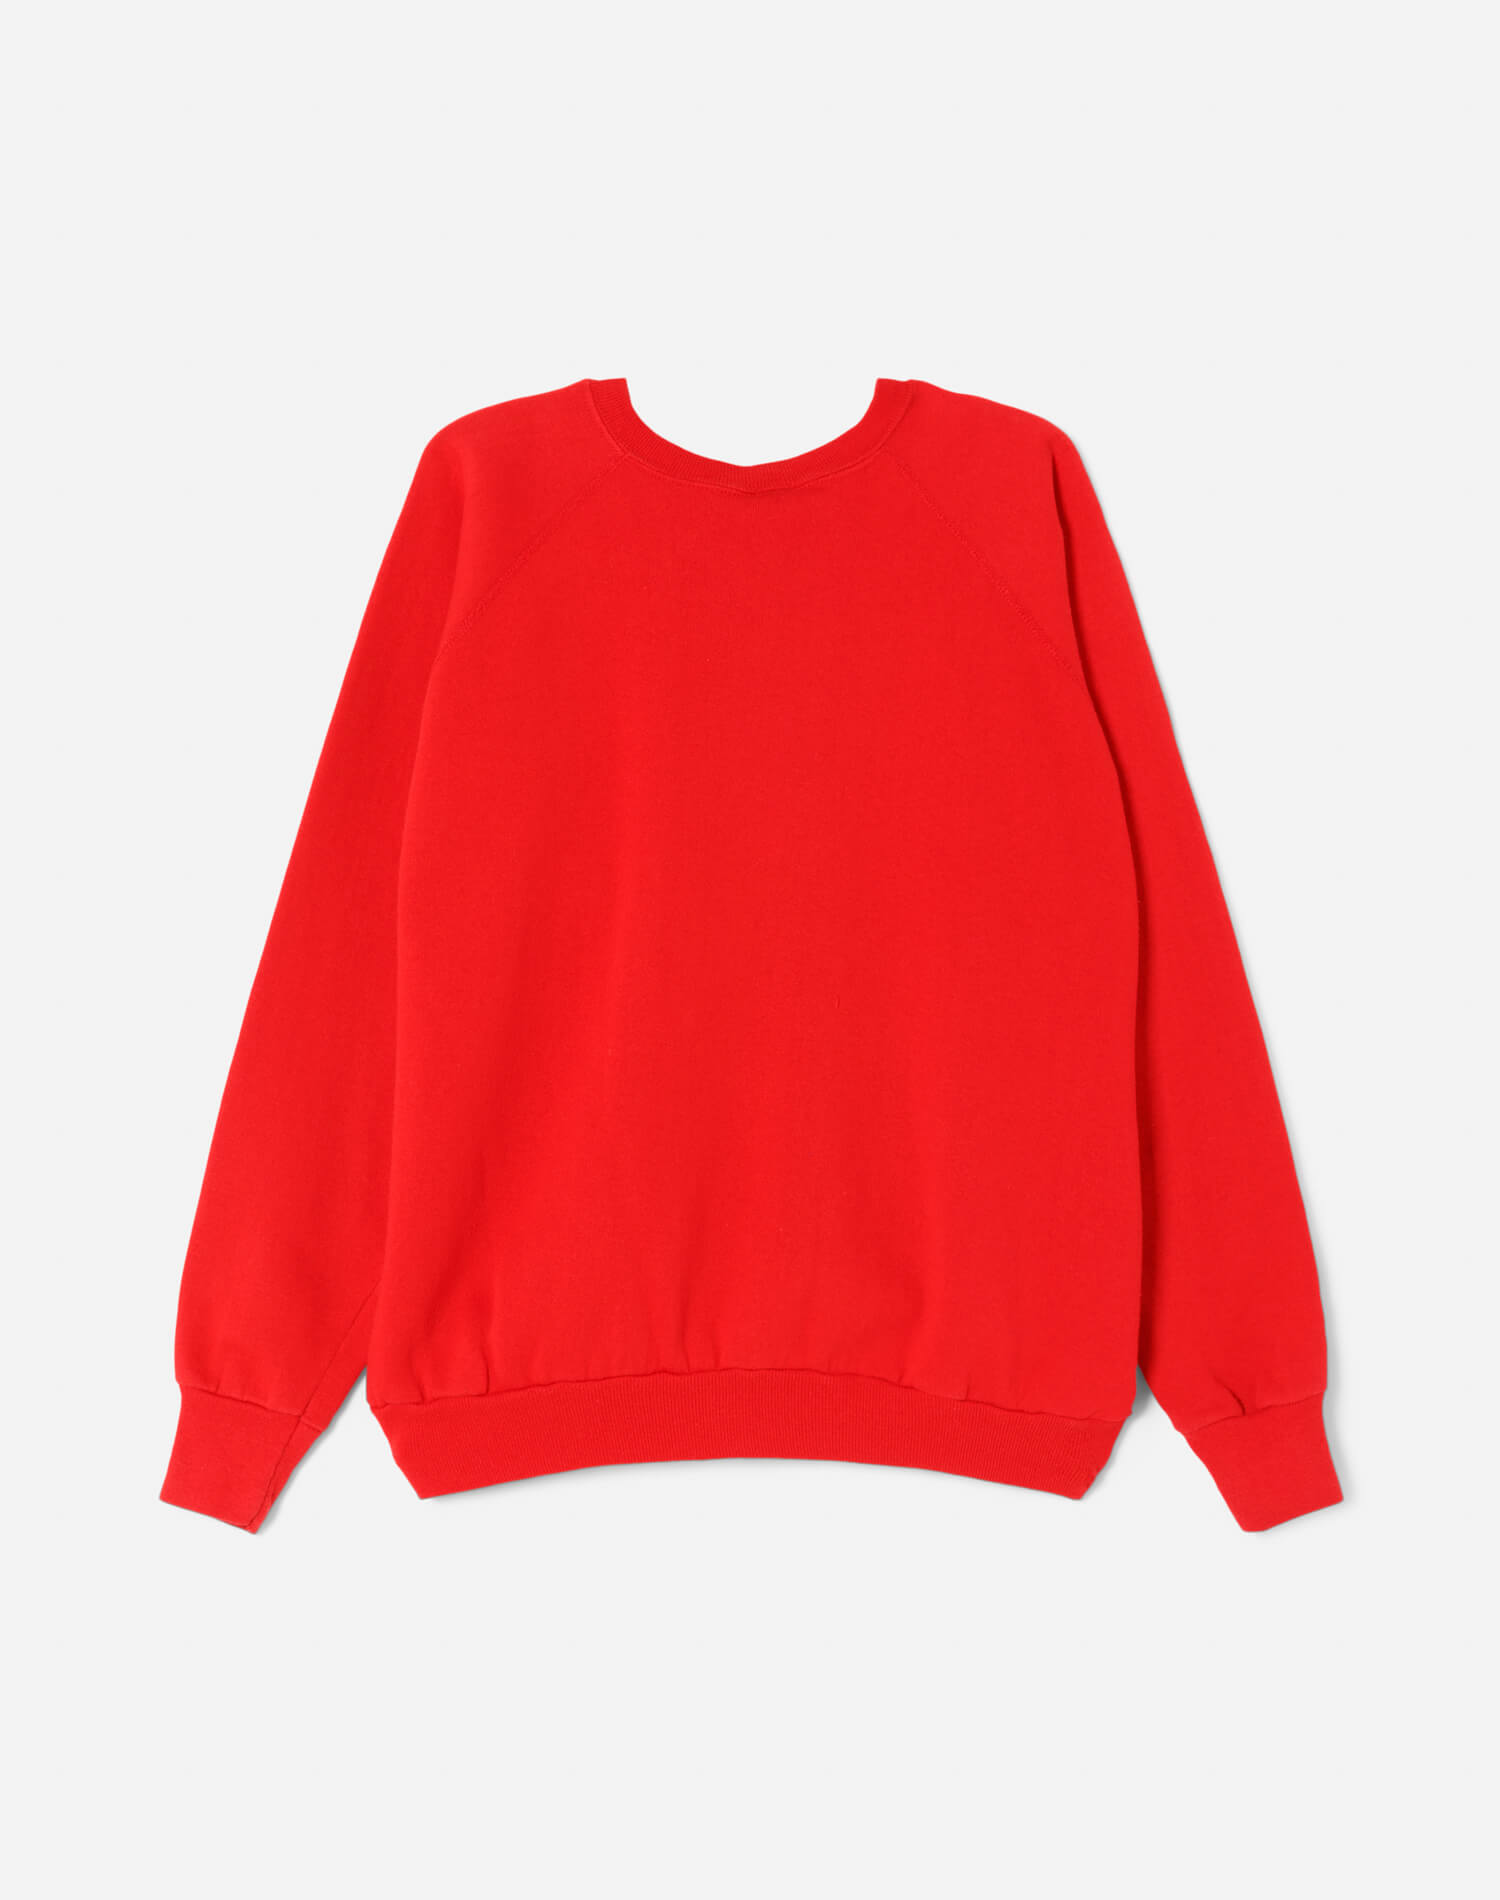 Upcycled "LAX" Sweatshirt - Red